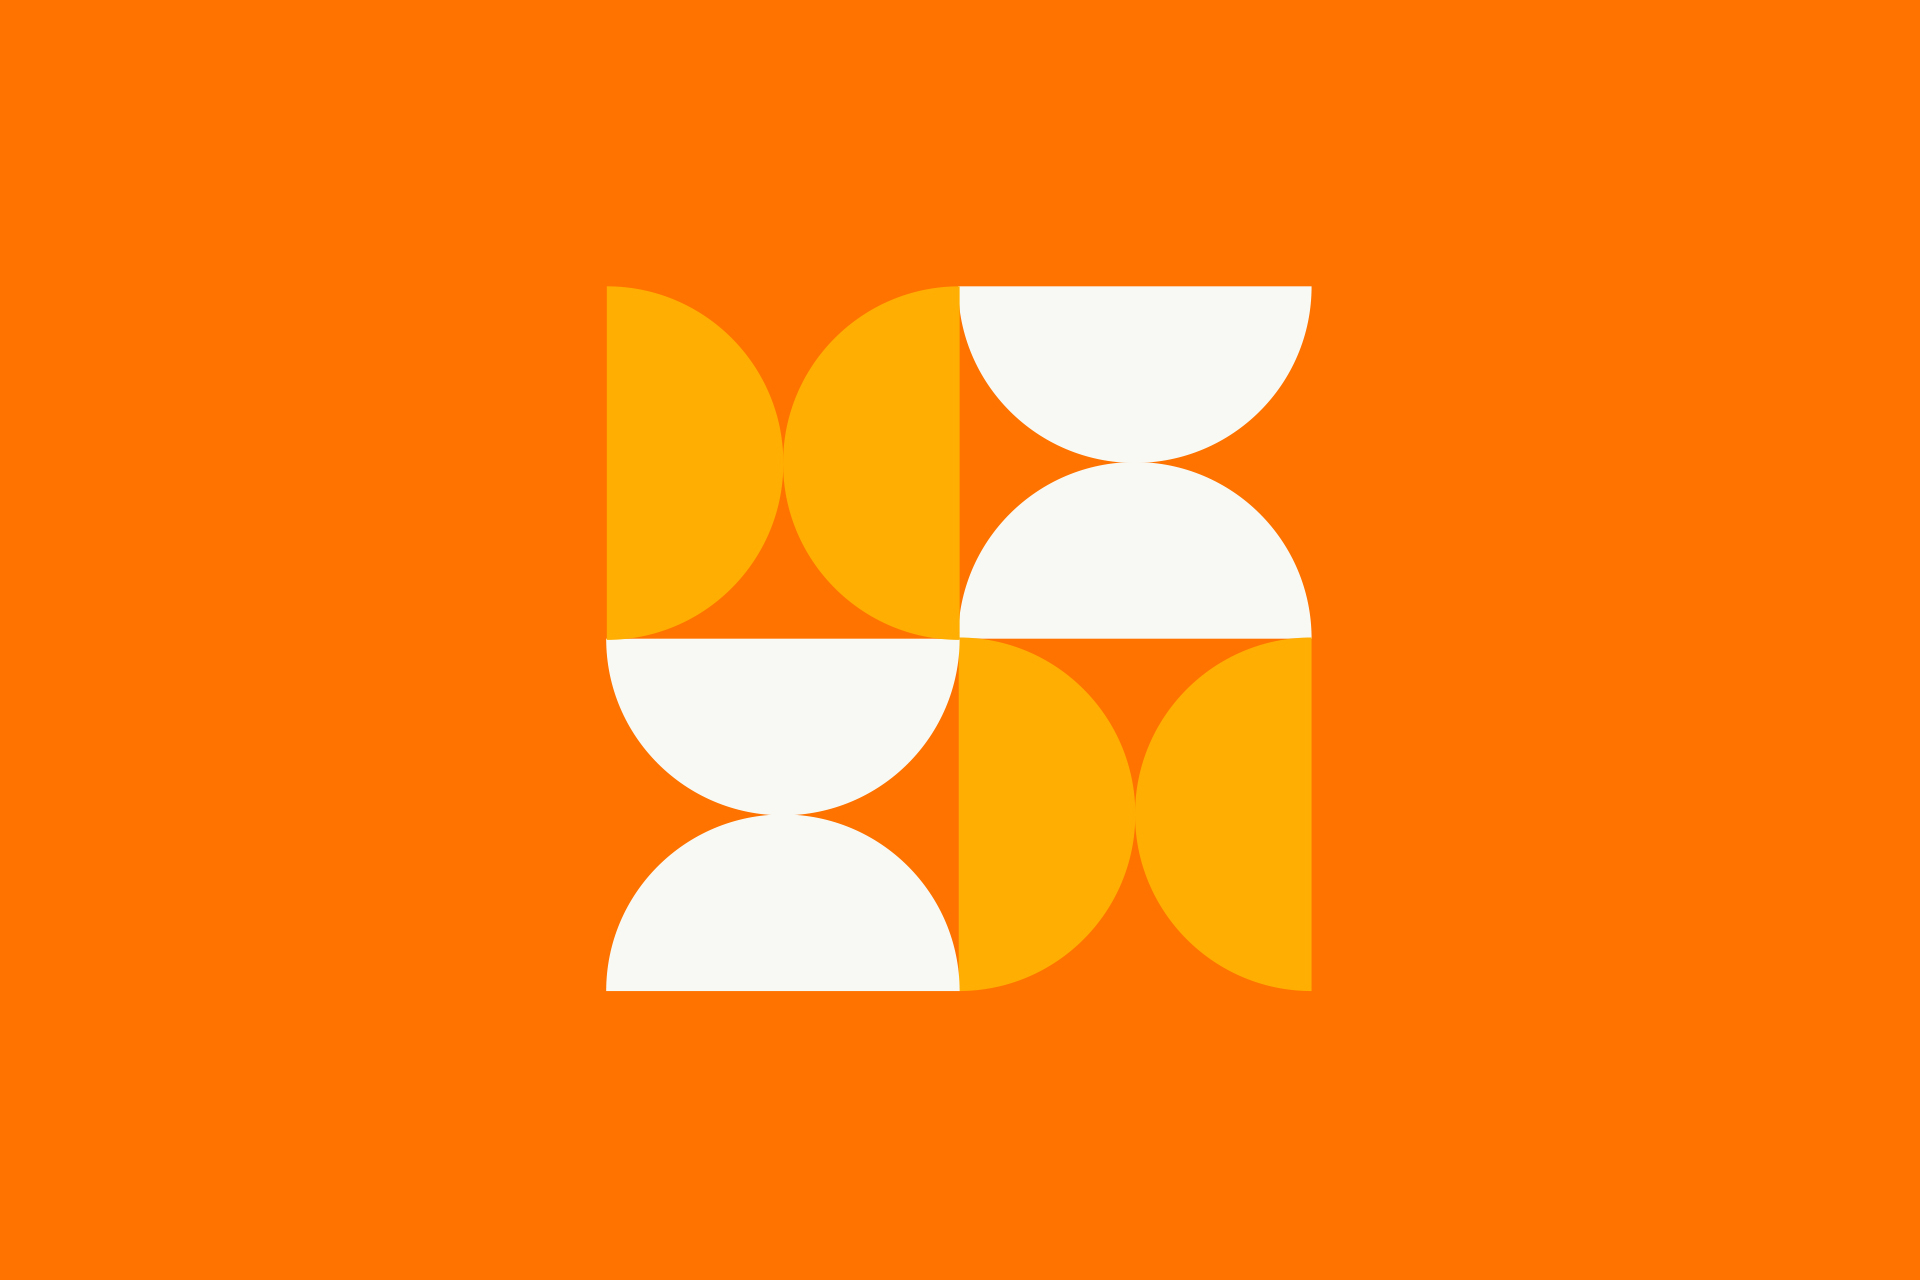 Orange color in the design